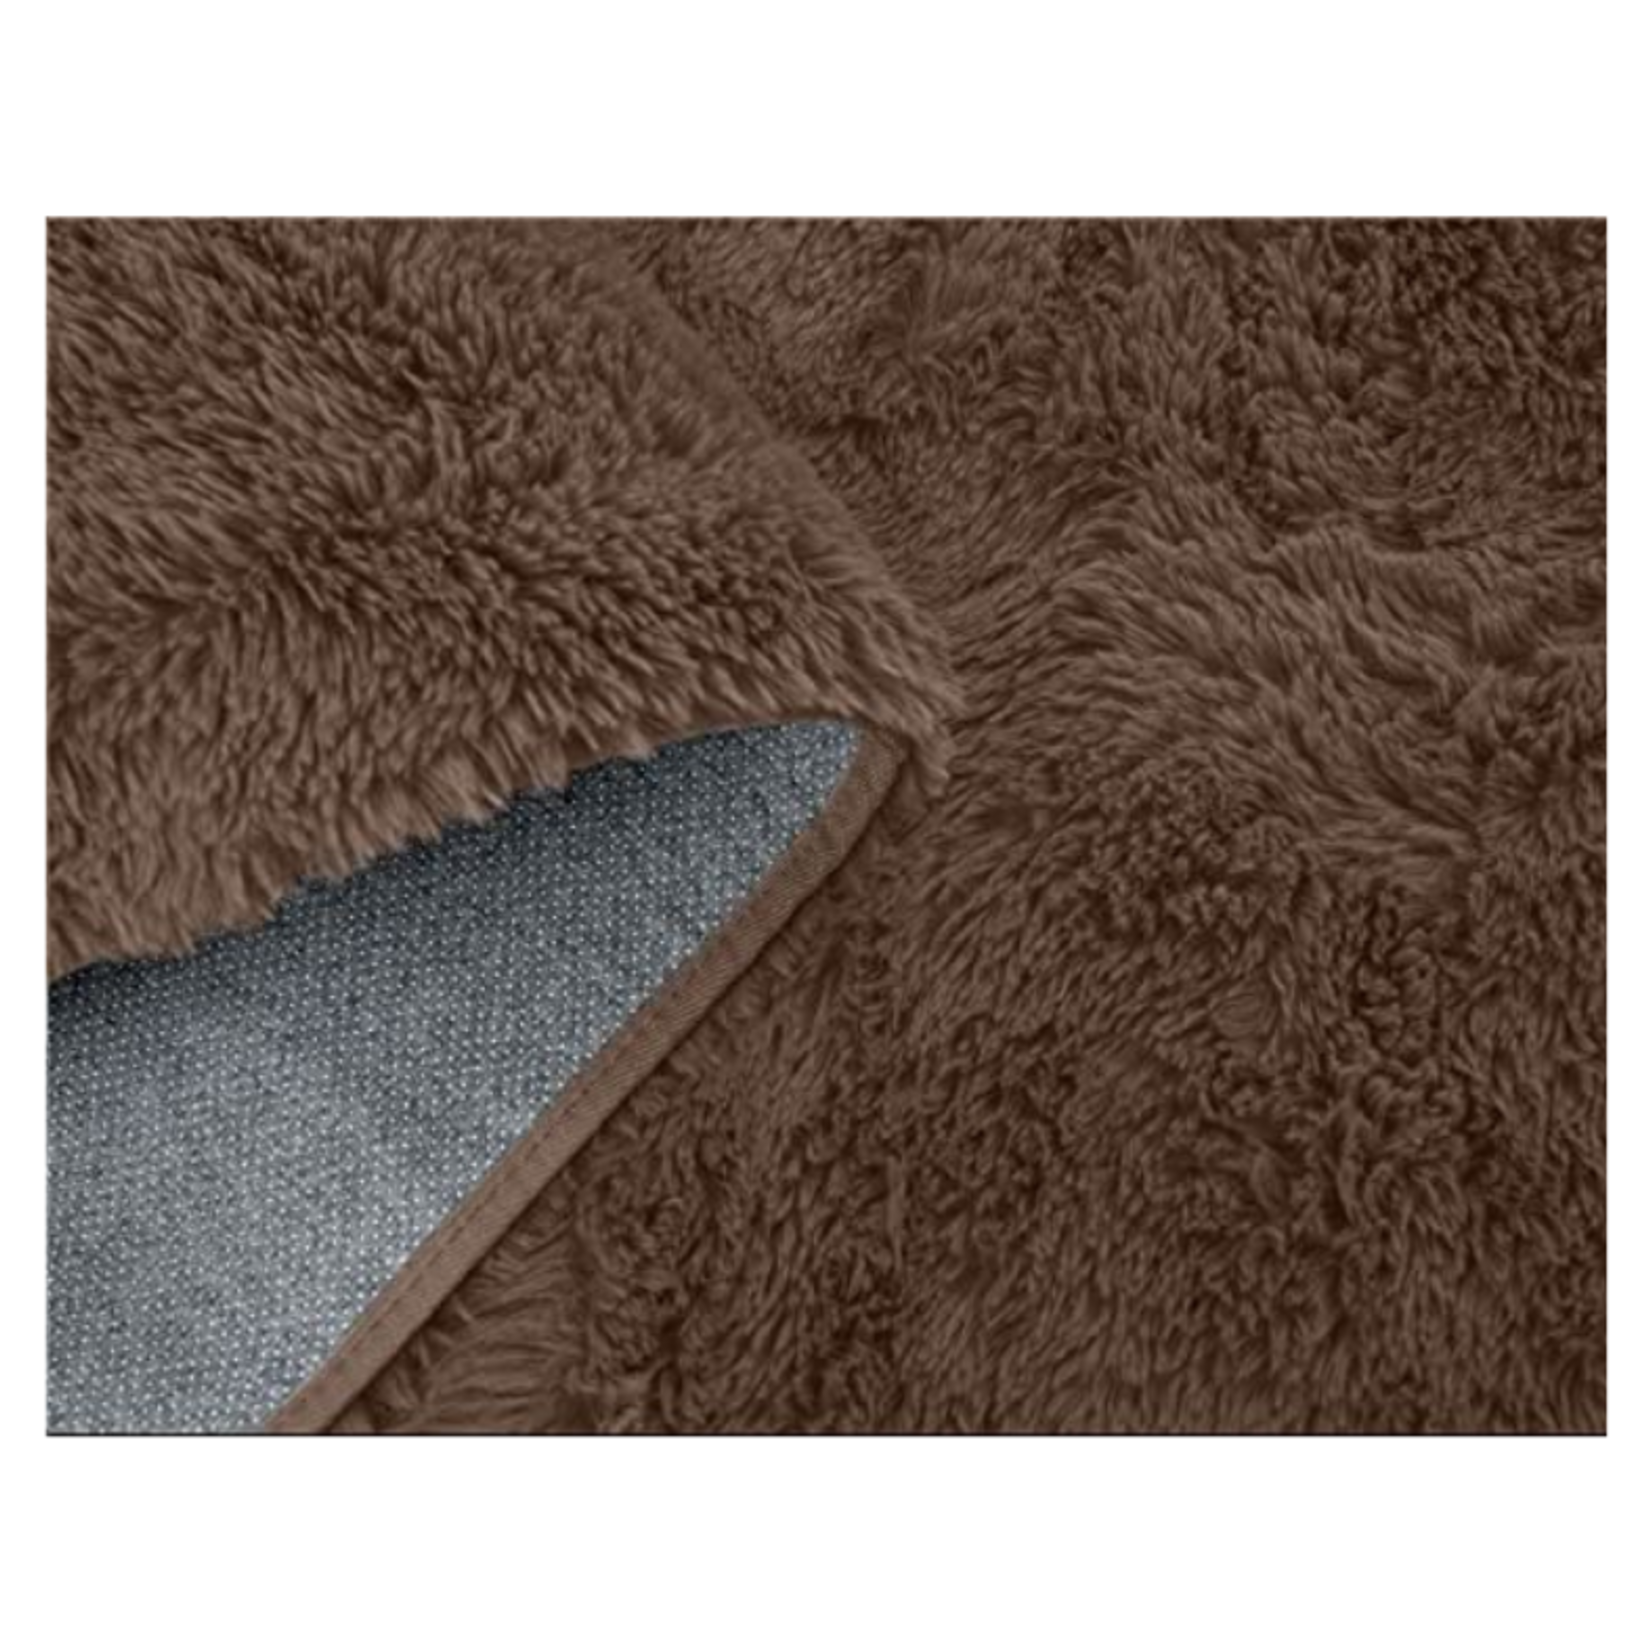 Gorilla Grip Faux Fur Area Rug- 5x7 Feet- Brown